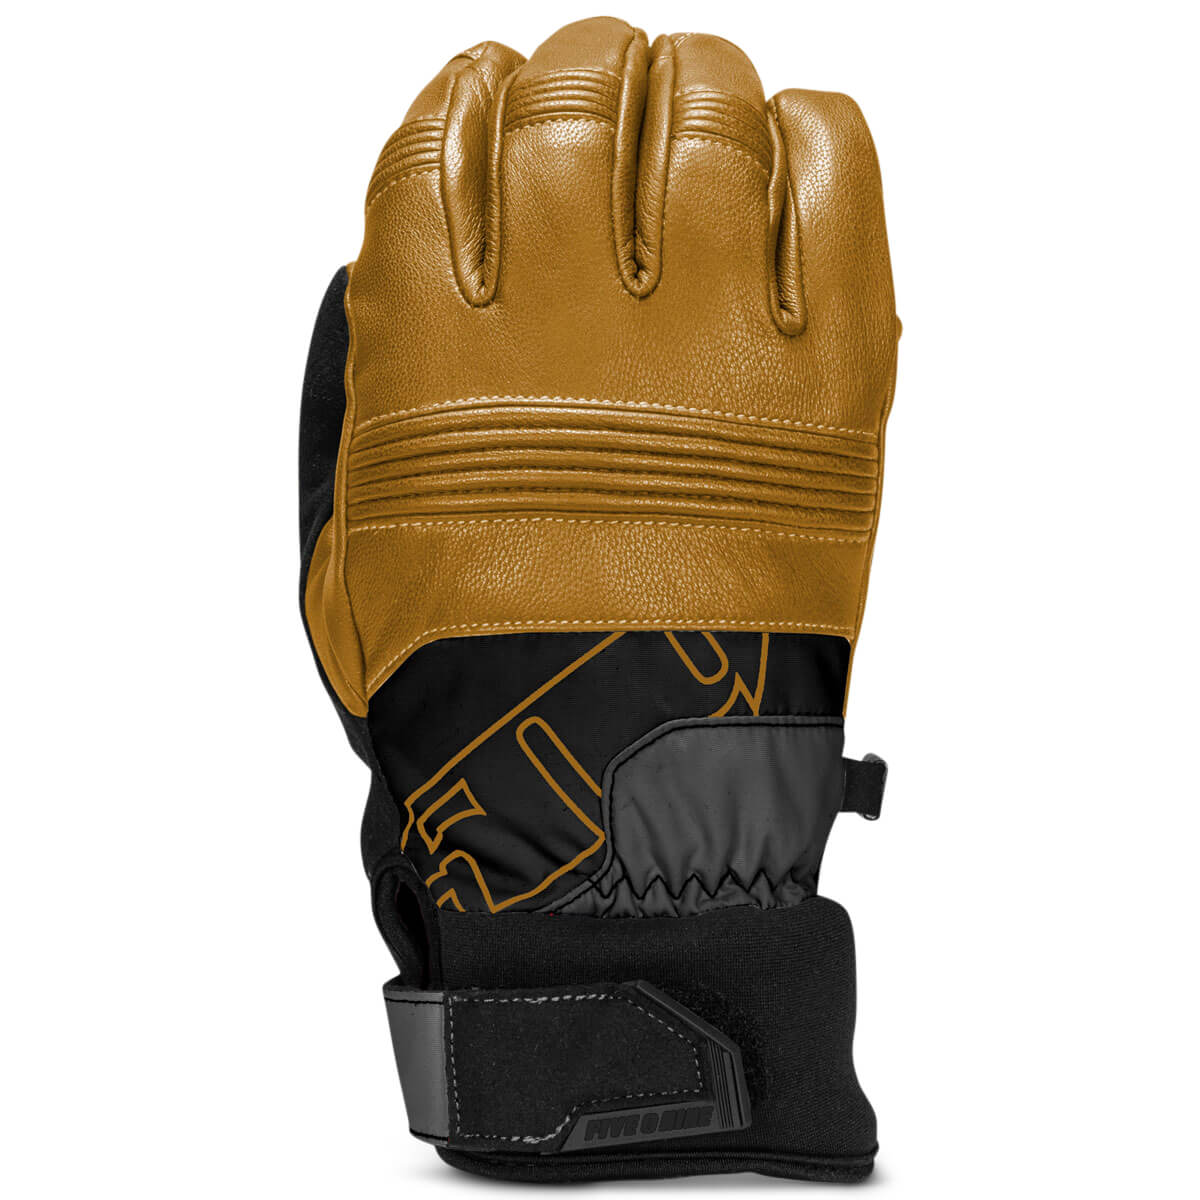 Free Range Gloves - Buckhorn / XS